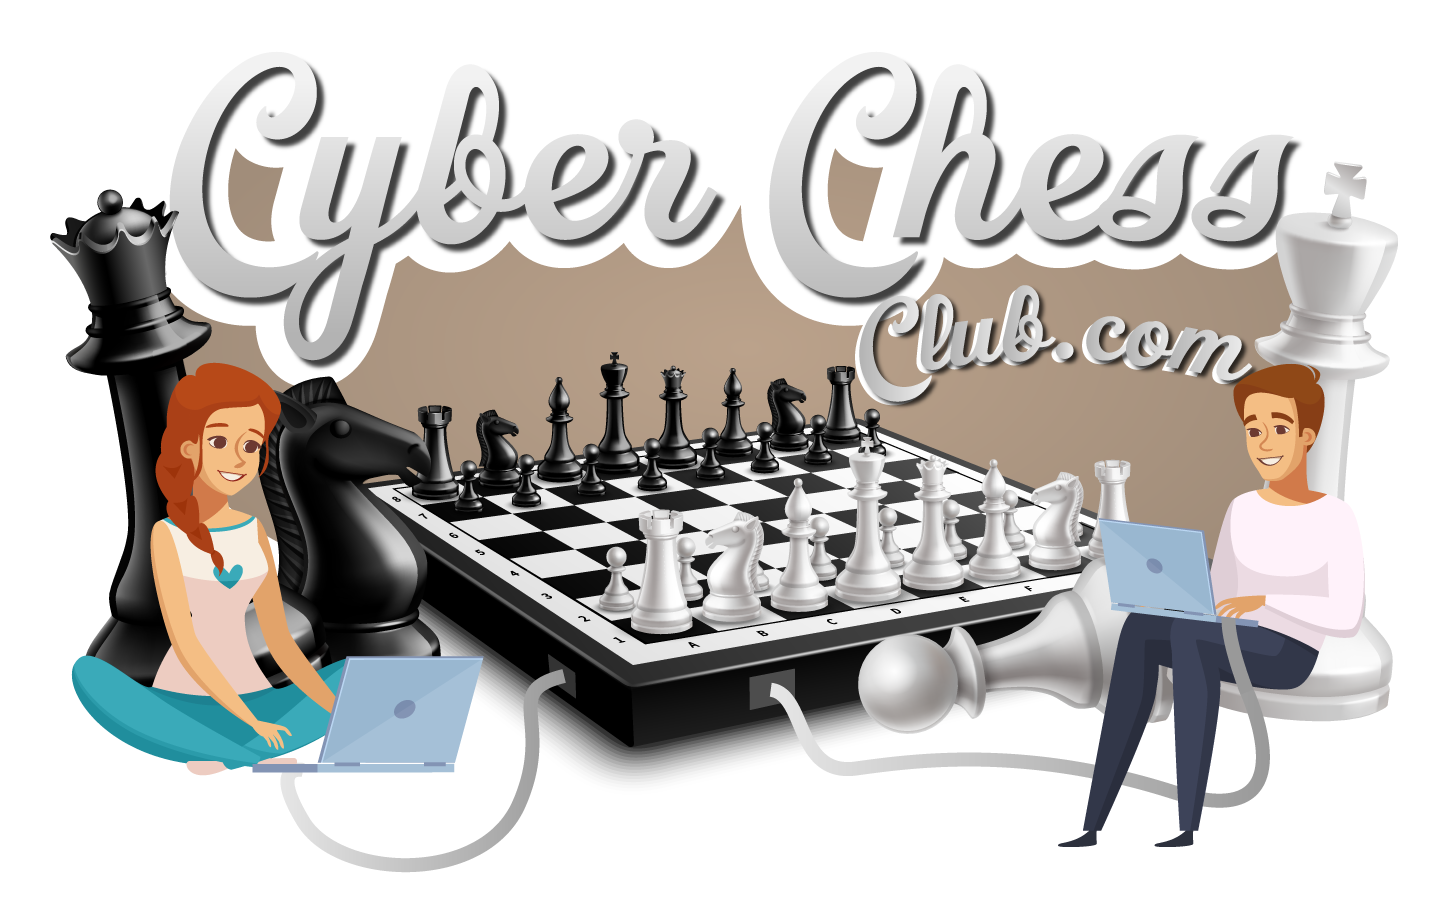 cyberchessacademy academy - Cyber Chess Academy - Cyber Chess Academy